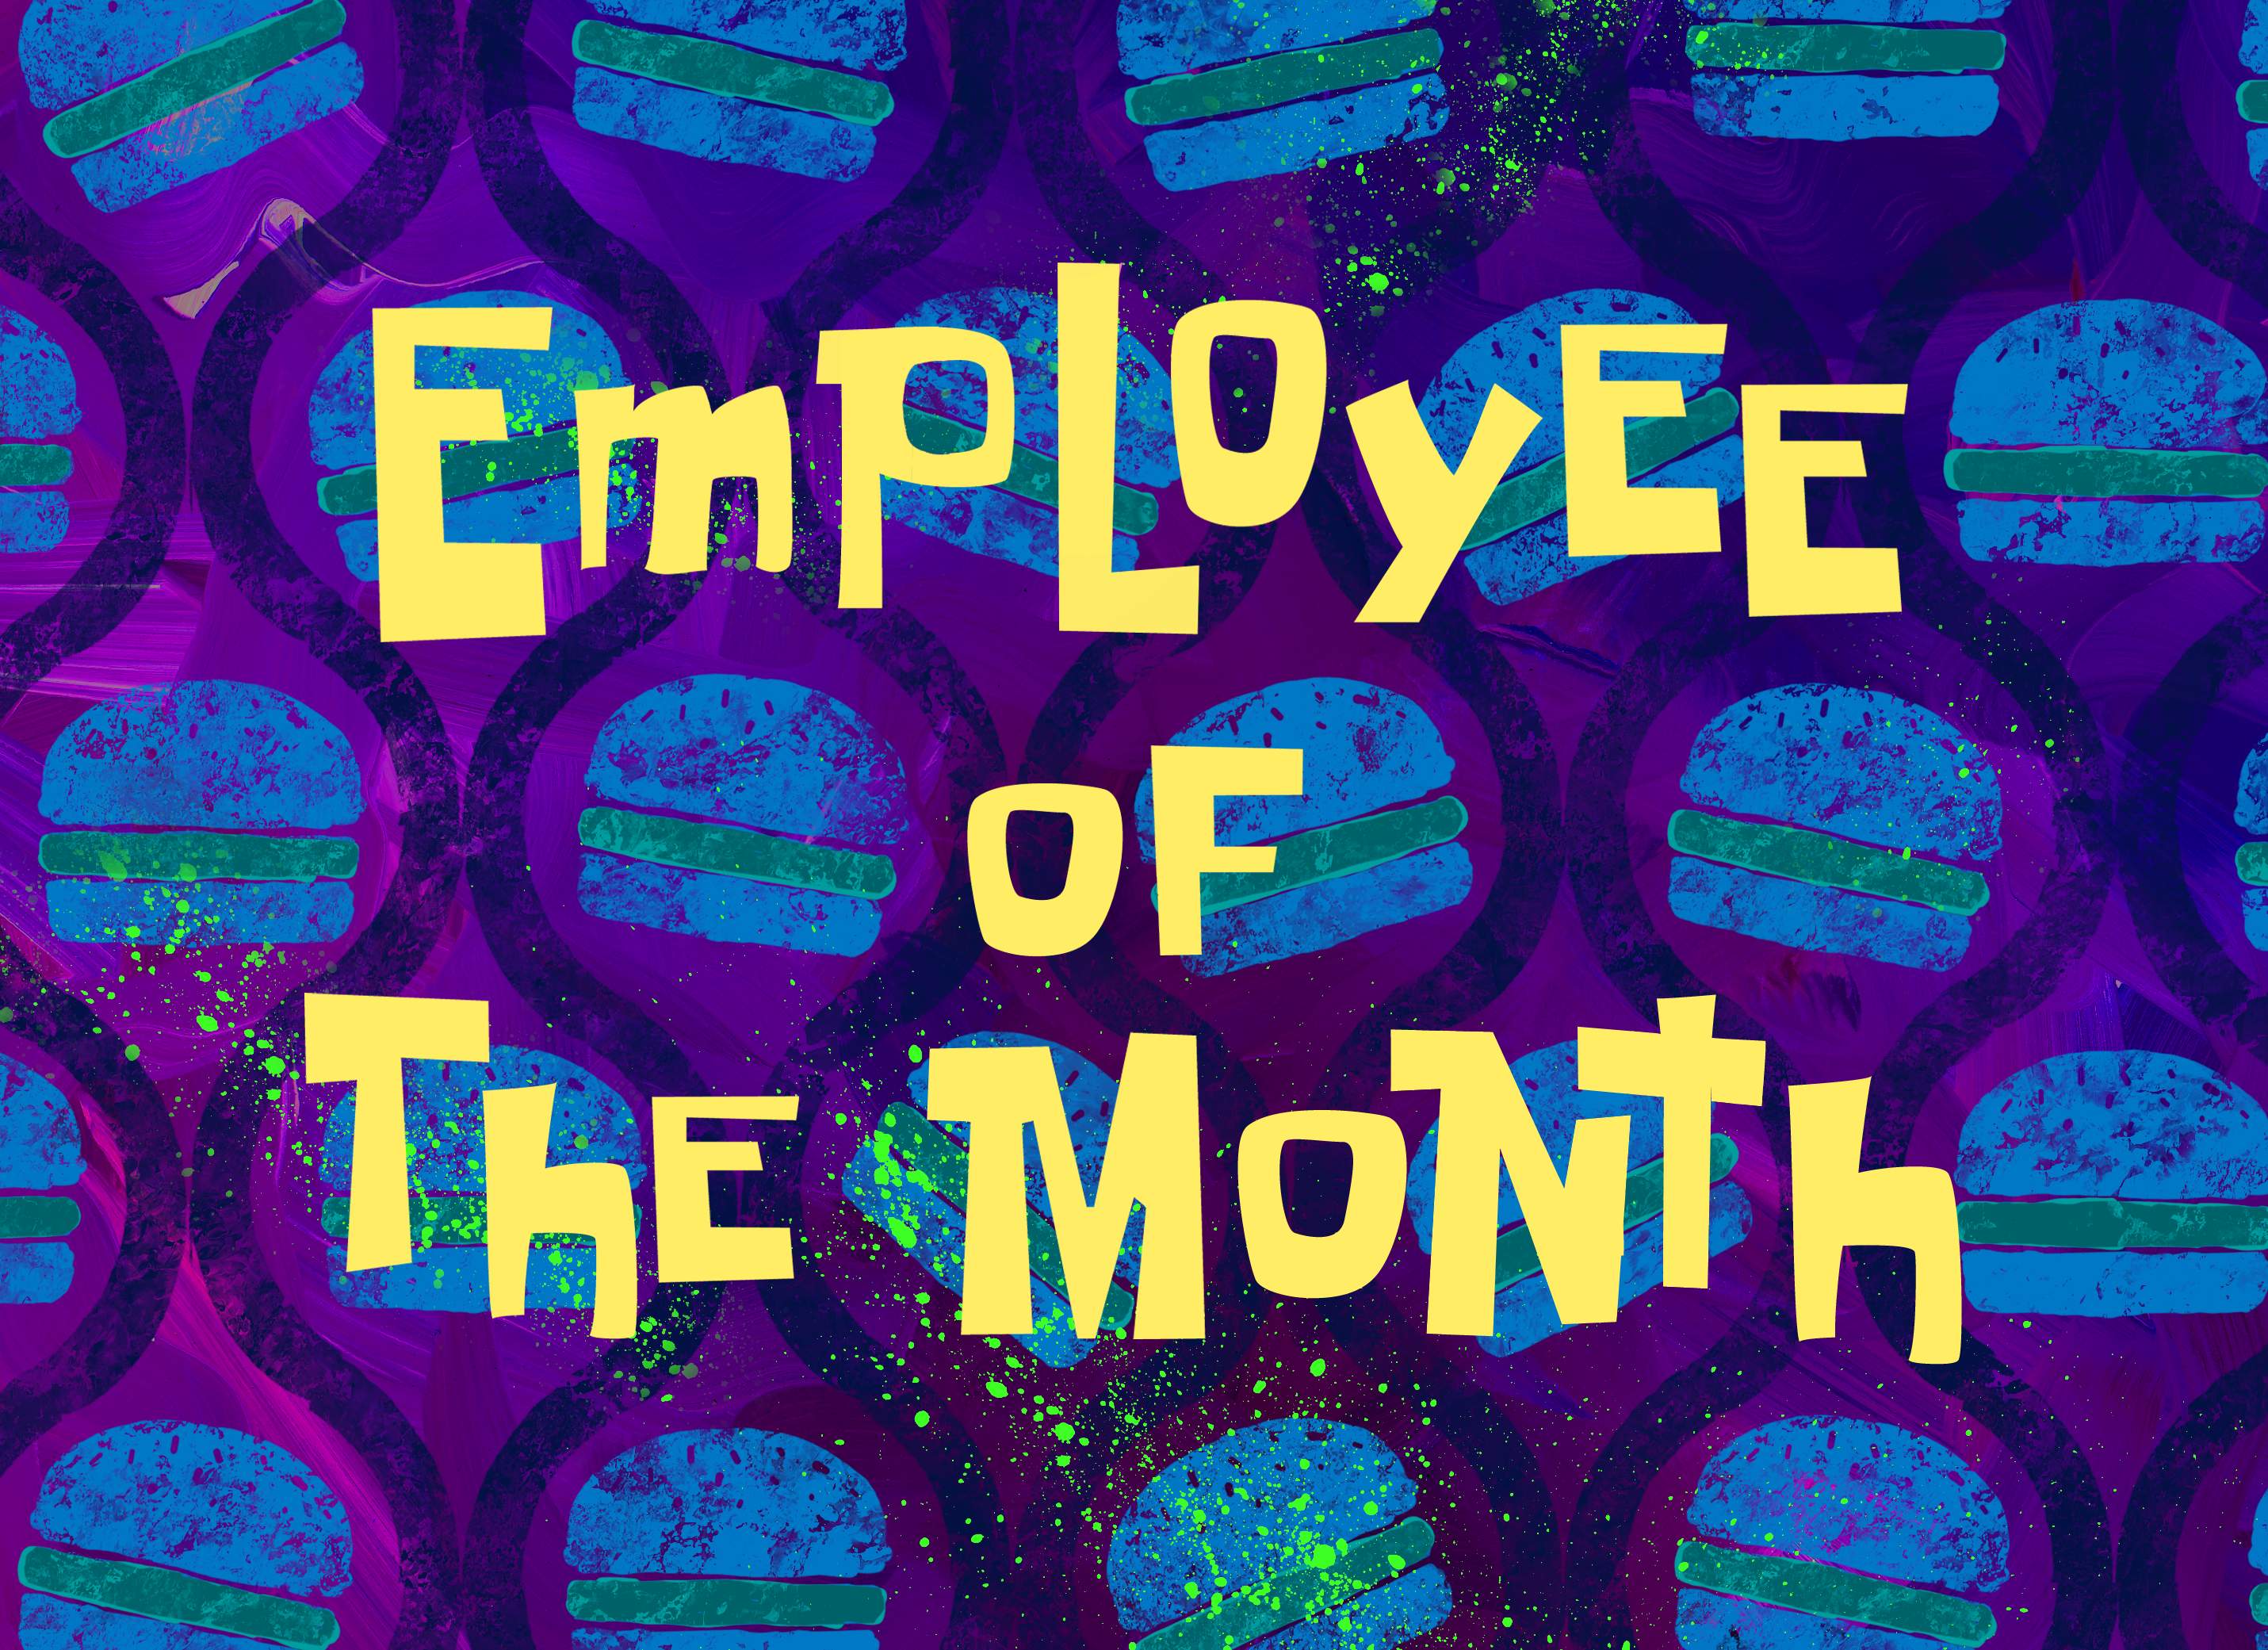 spongebob squarepants employee of the month video game